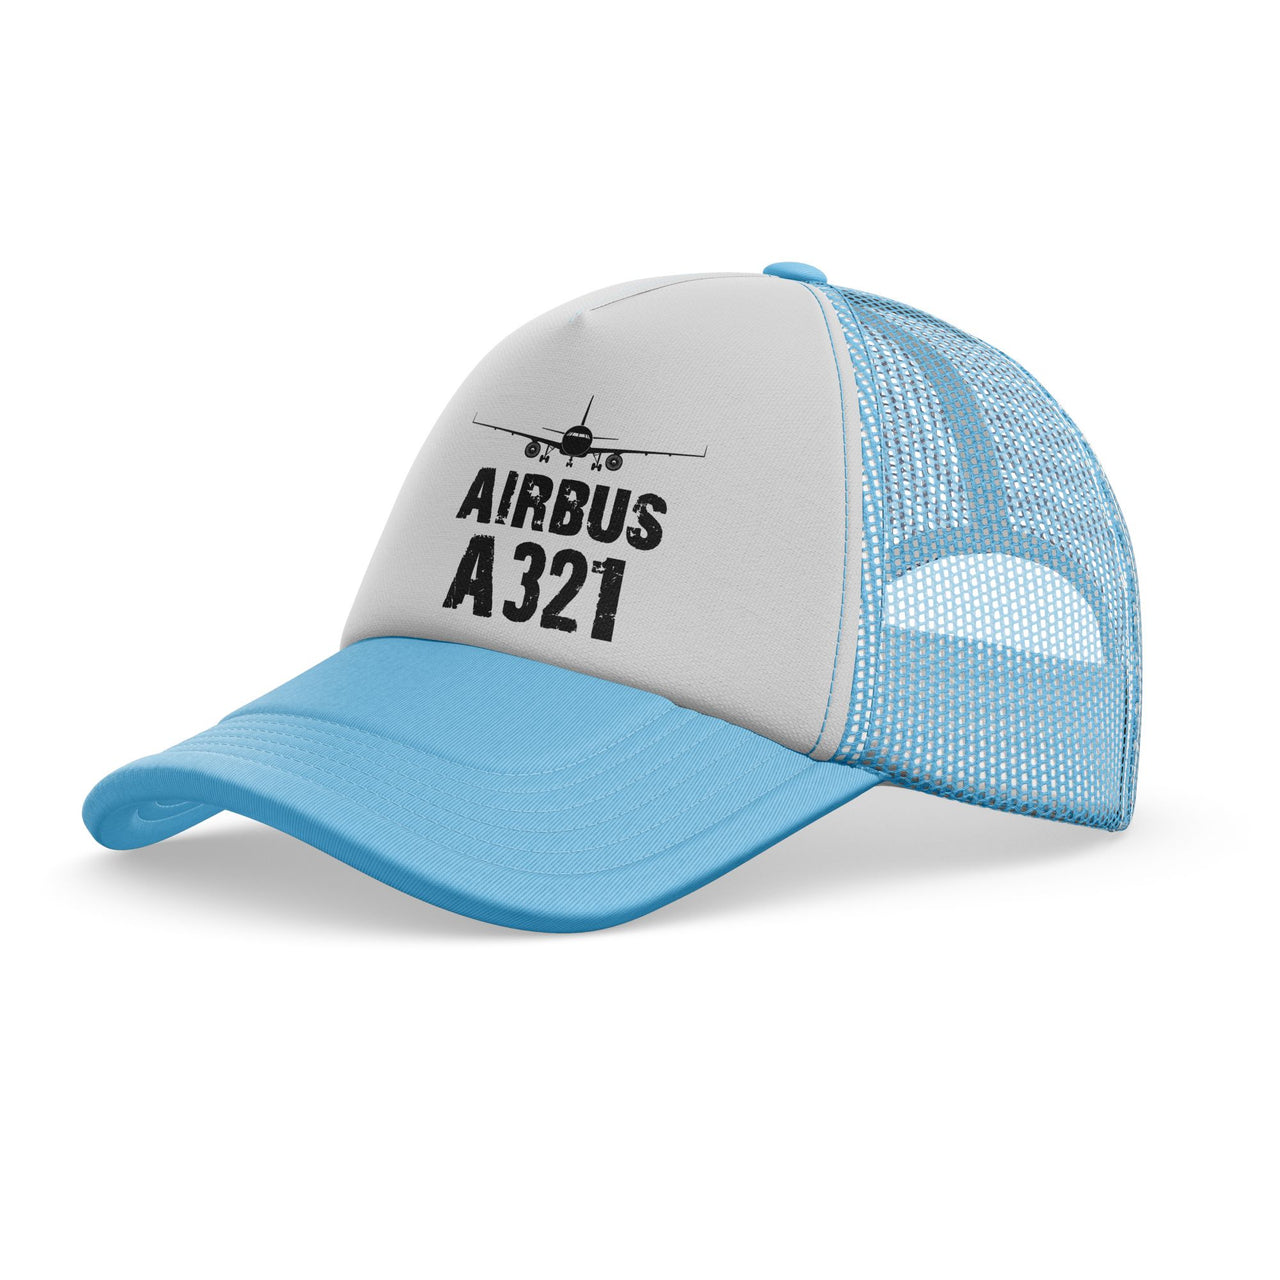 Airbus A321 & Plane Designed Trucker Caps & Hats